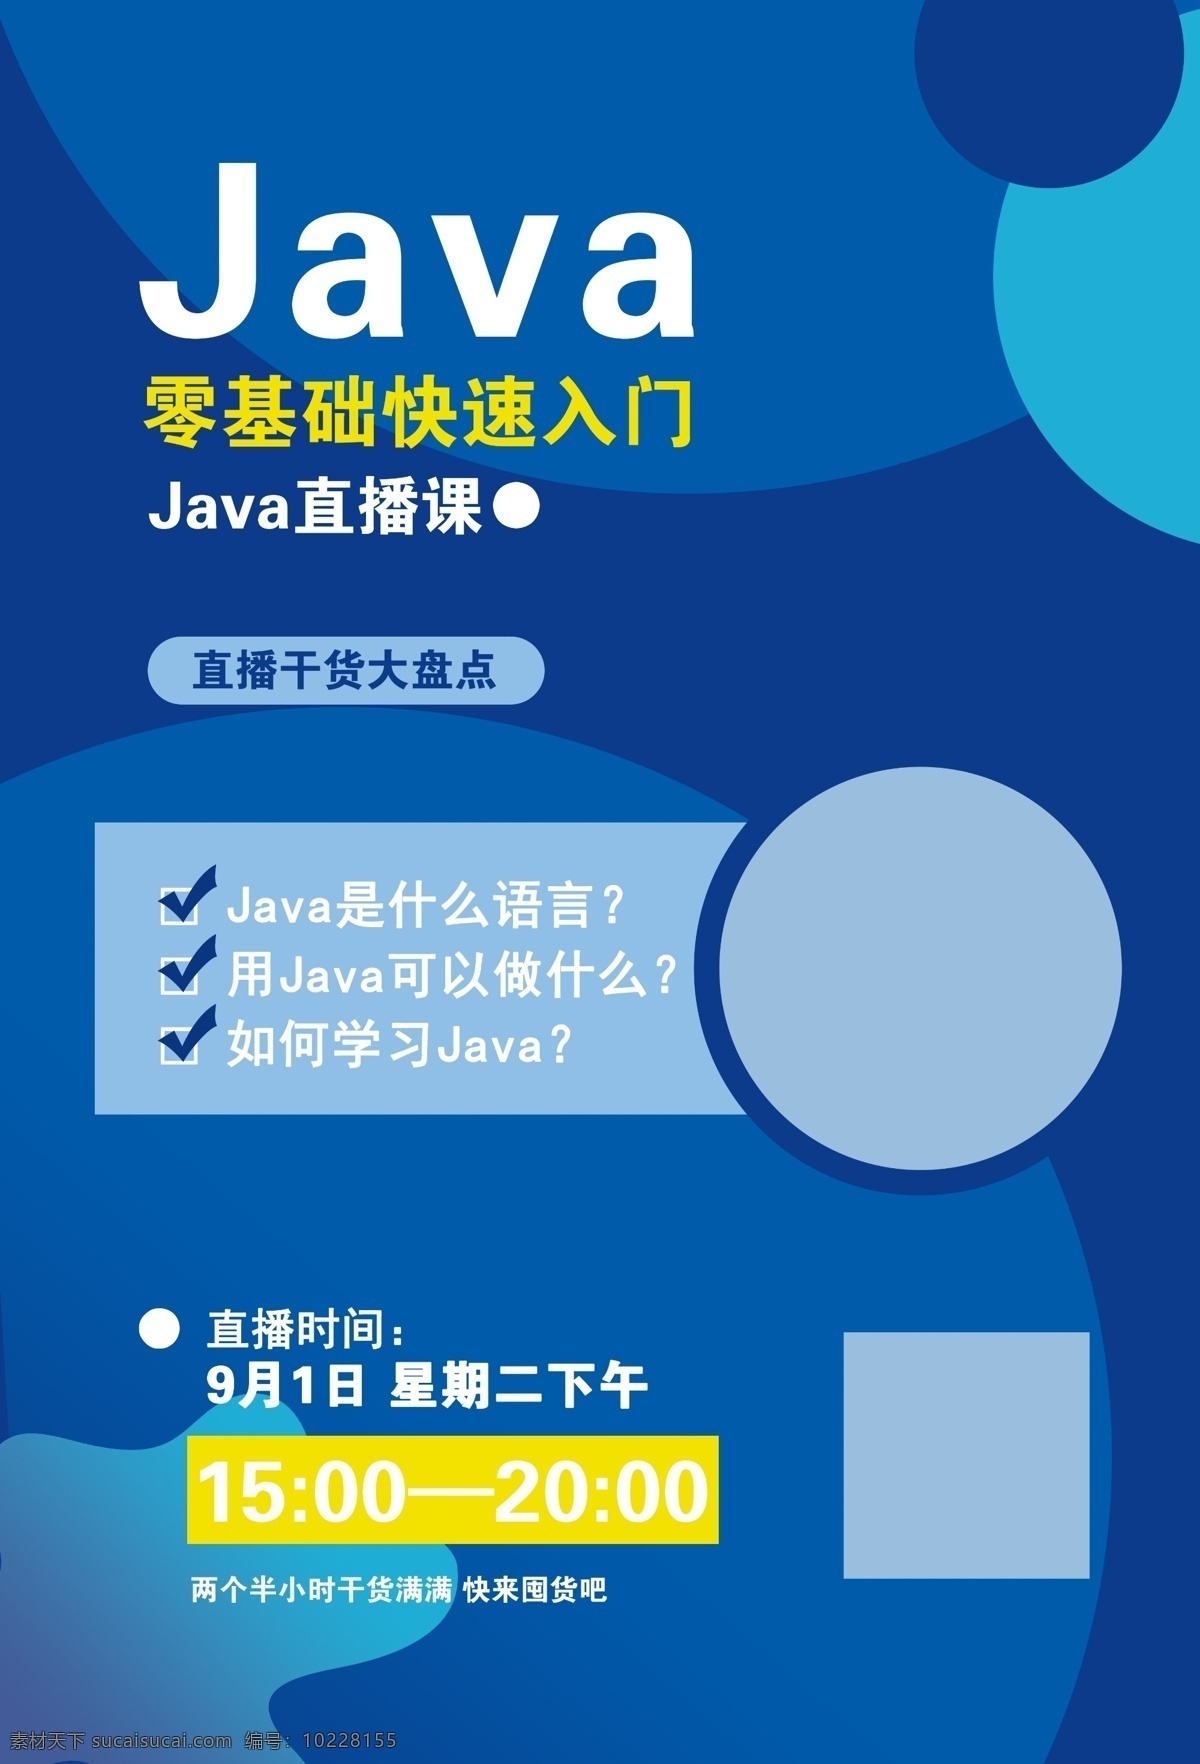 java 语言 海报 java海报 程序开发 软件编程 软件技术